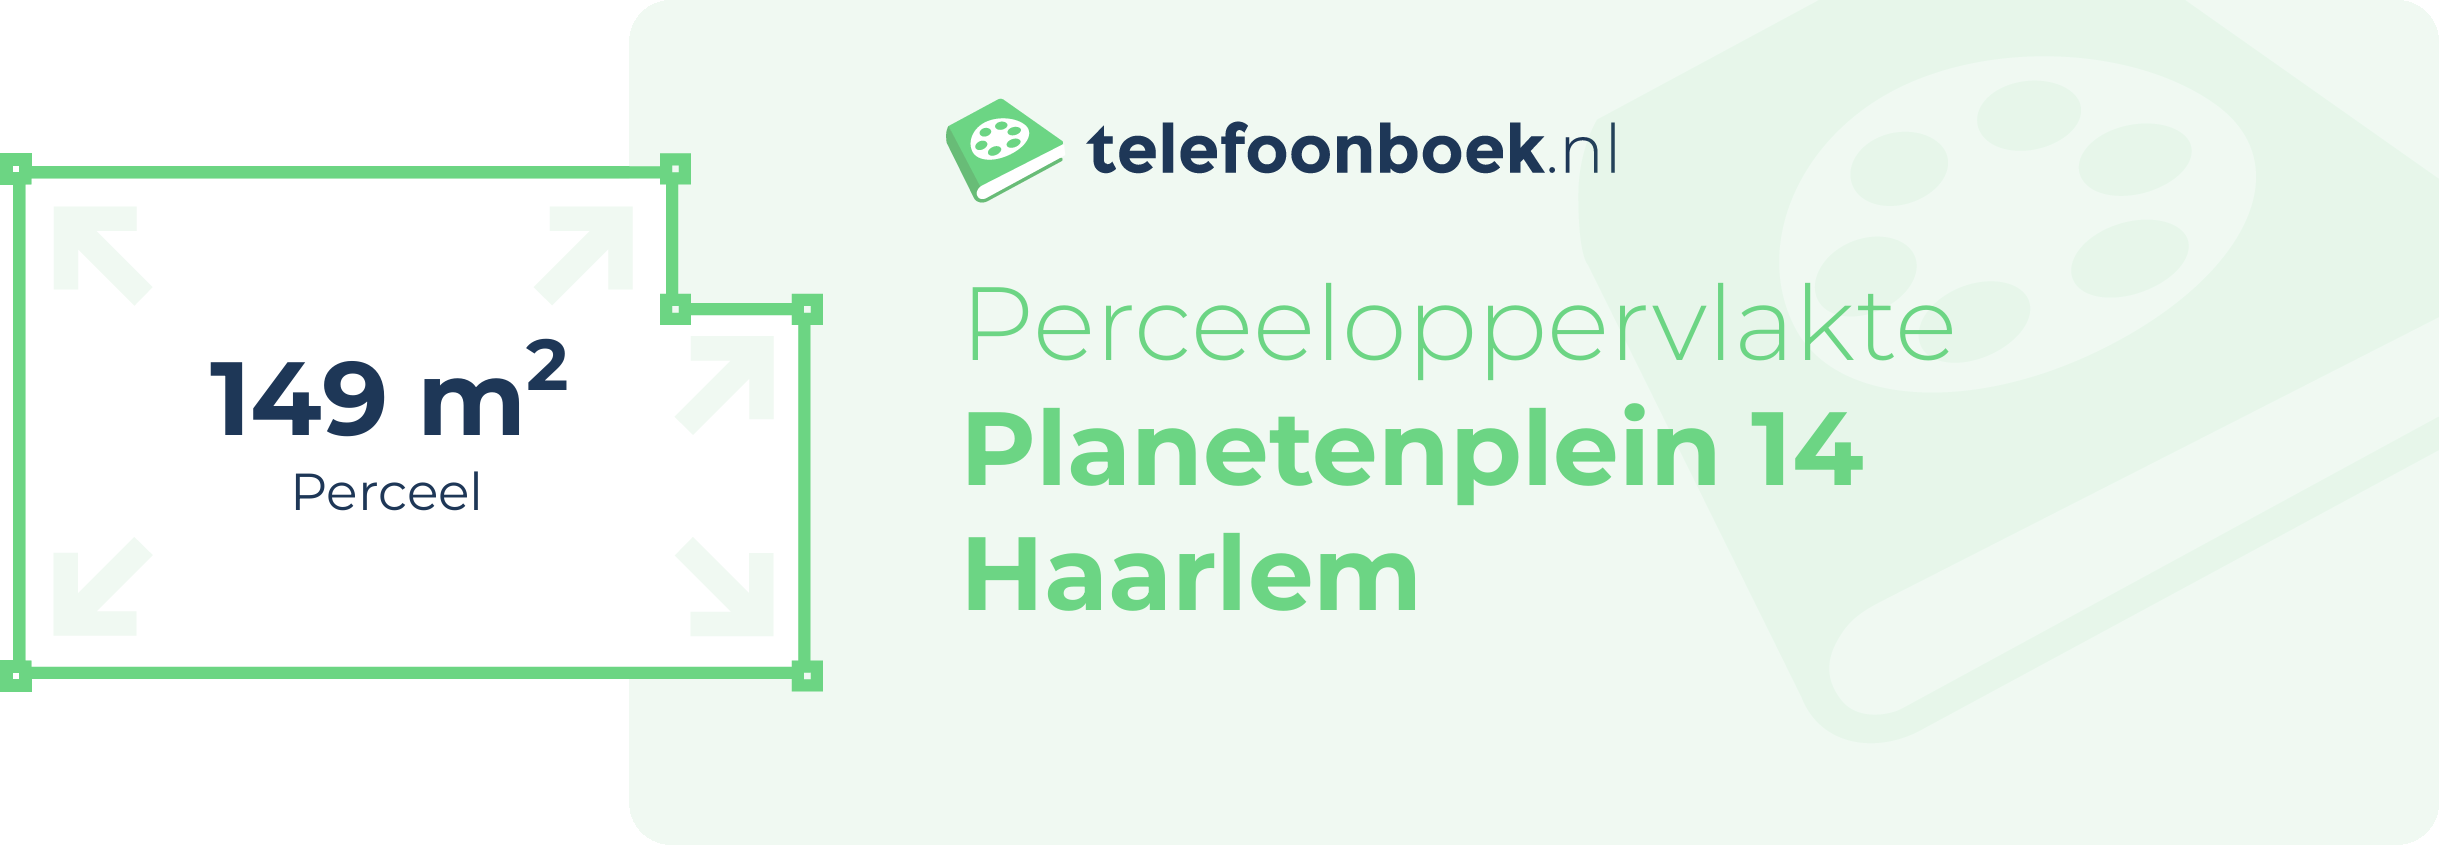 Perceeloppervlakte Planetenplein 14 Haarlem